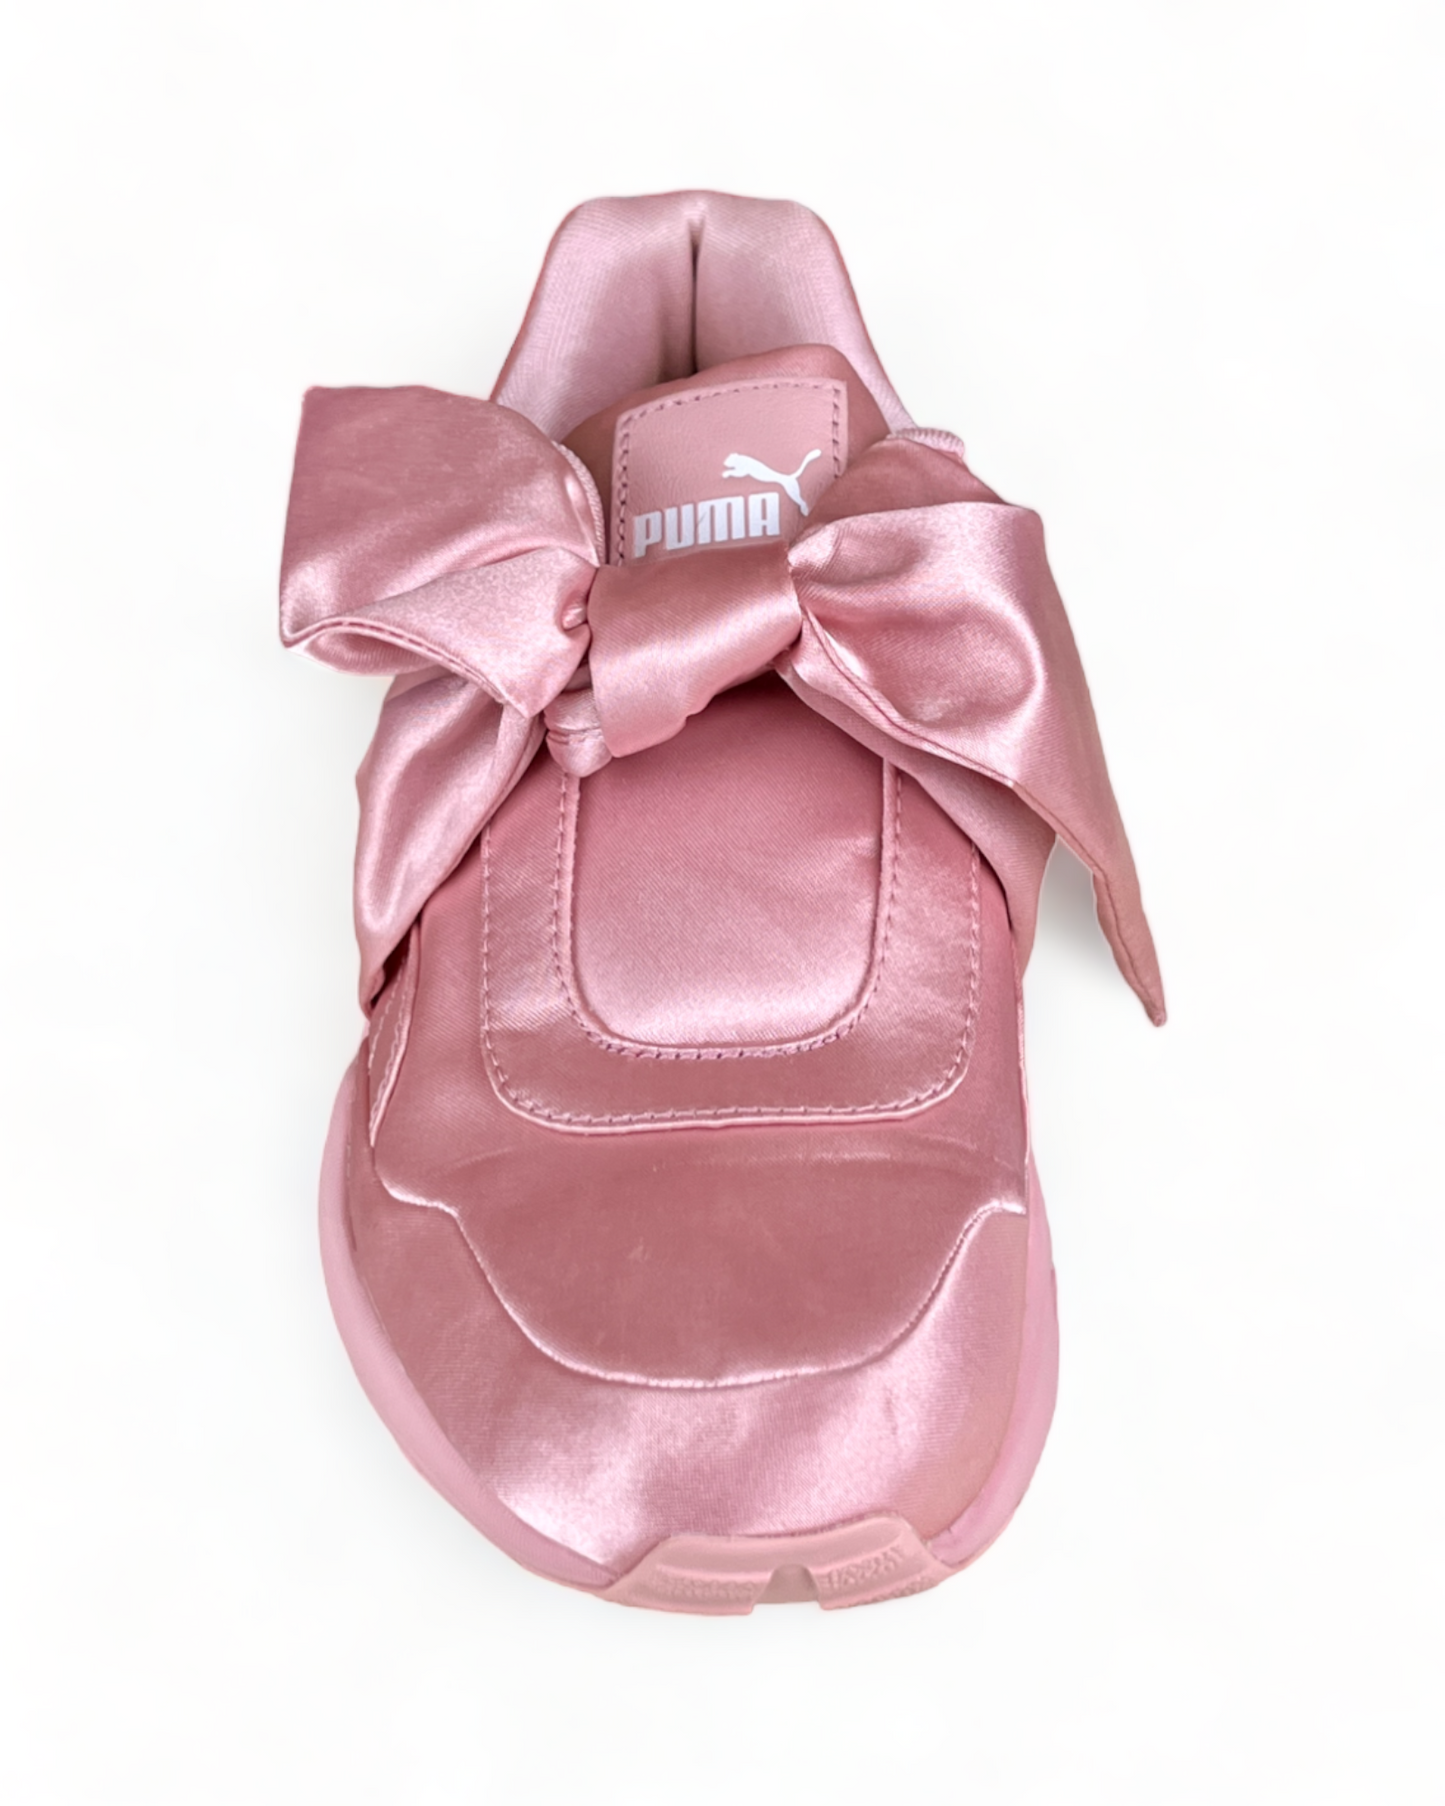 Puma X Rihanna Fenty Bow Pink Sneakers